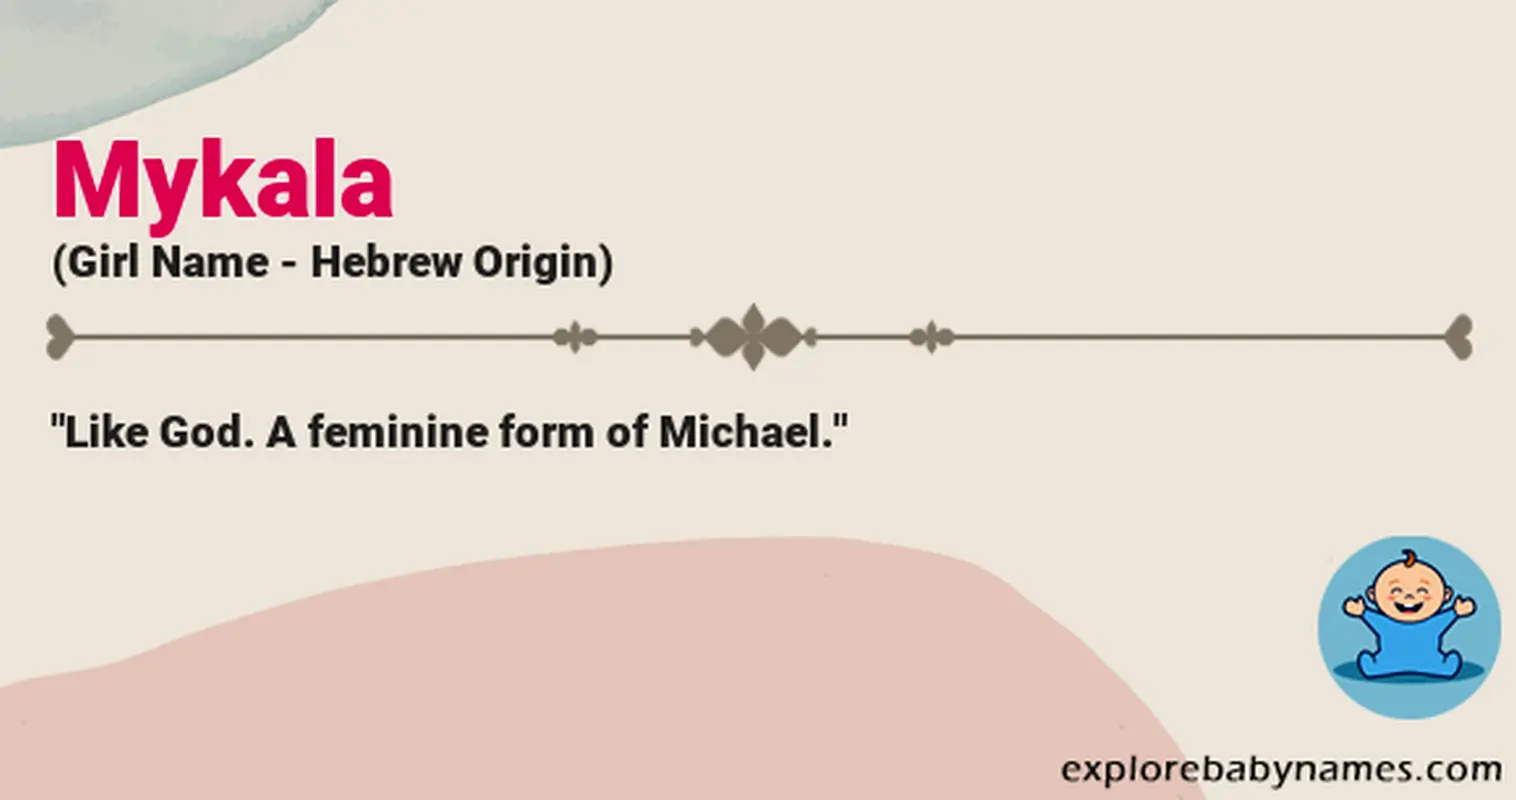 Meaning of Mykala